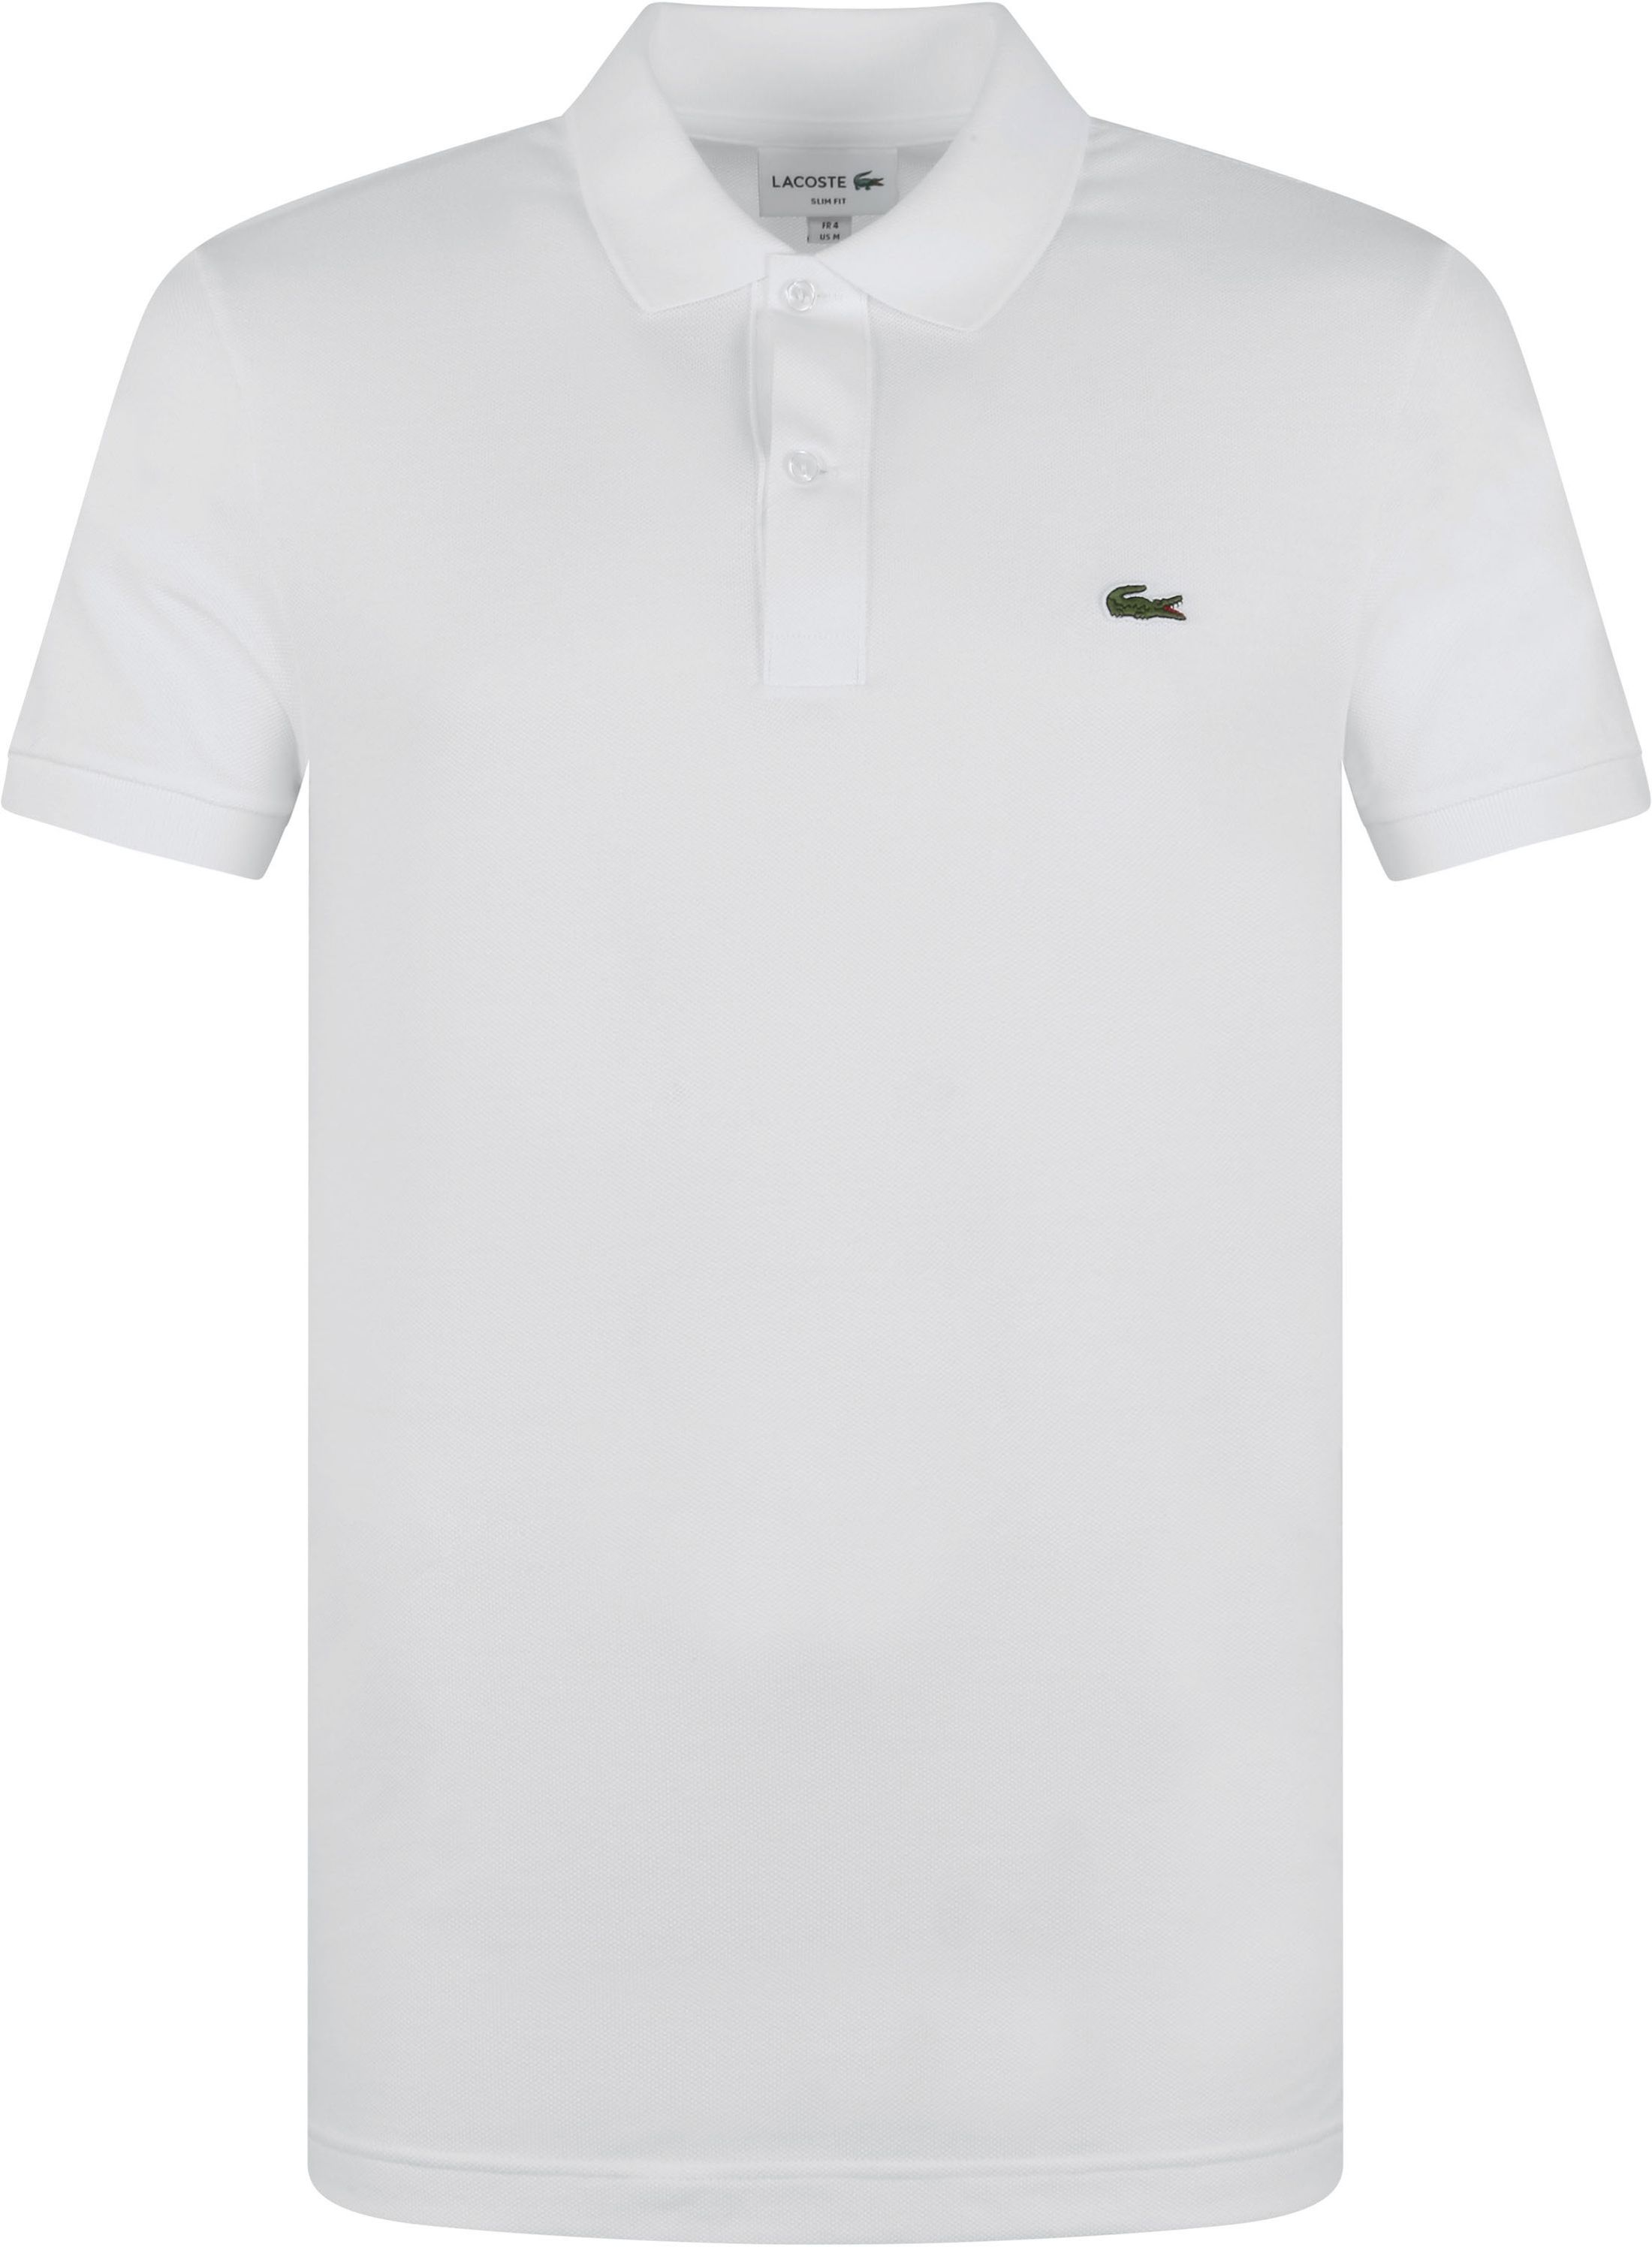 Lacoste Polo Shirt Pique White size L